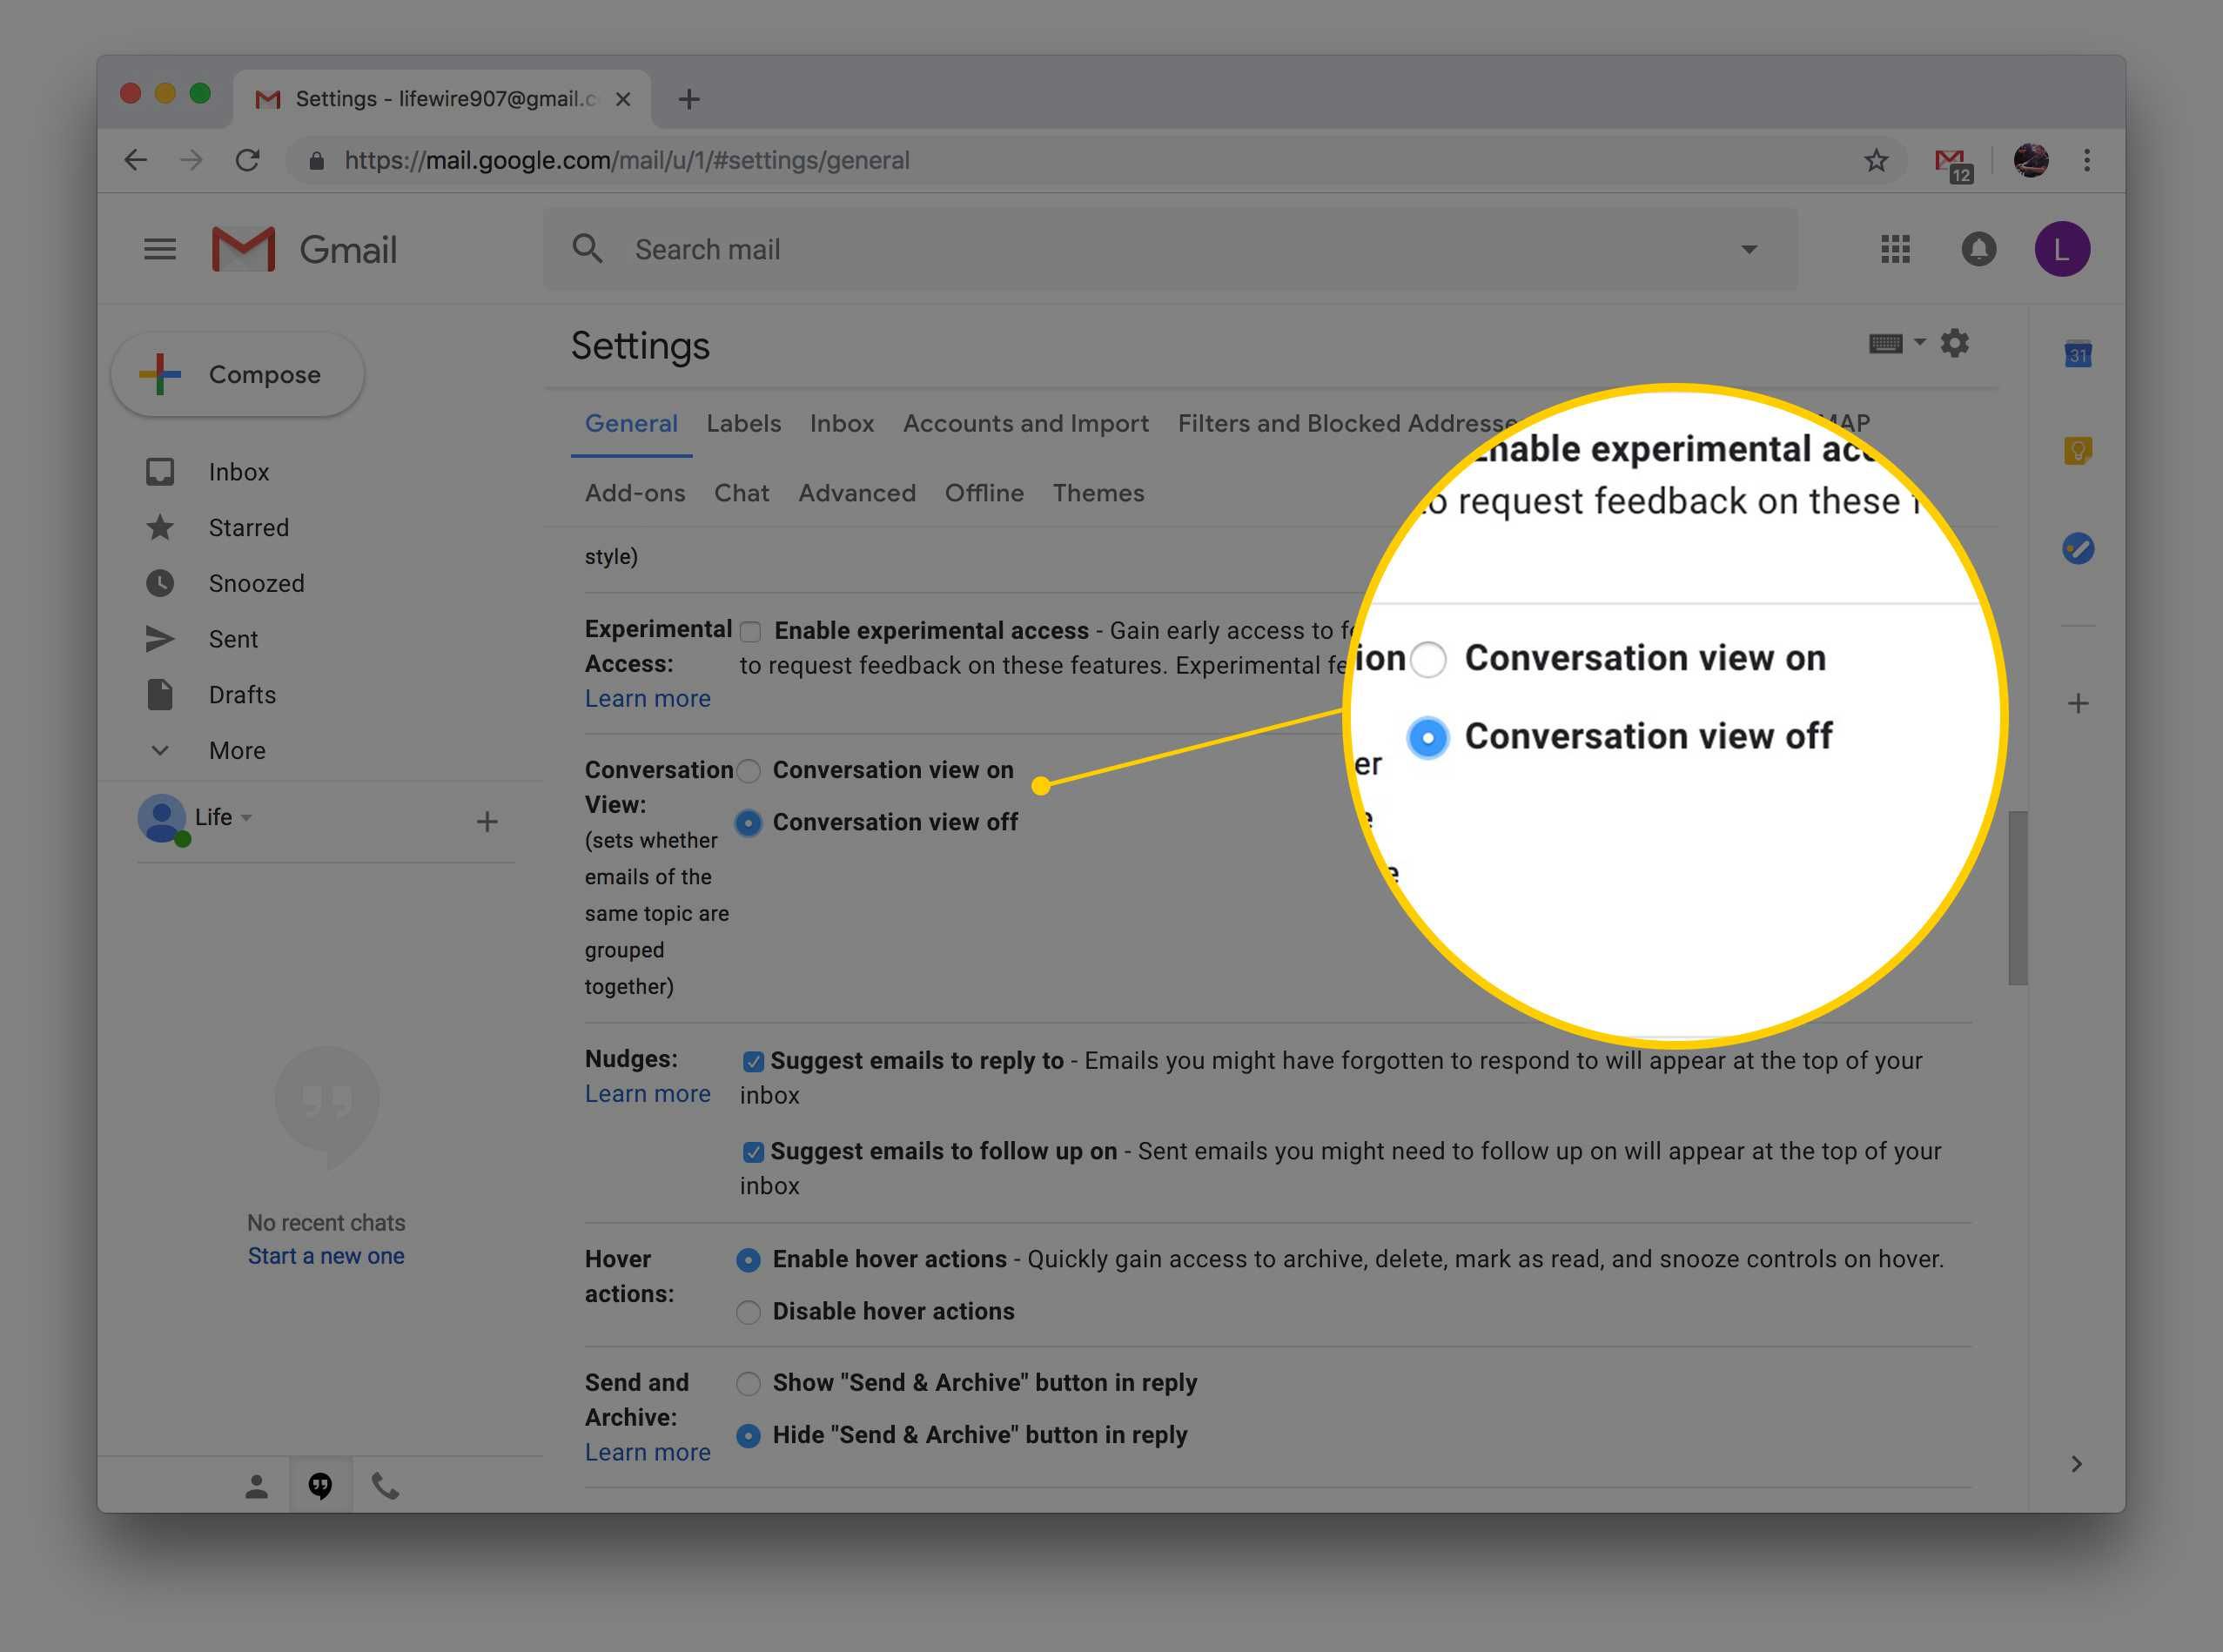 Снимок экрана с настройками Gmail с подсветкой параметров просмотра и отключения диалога